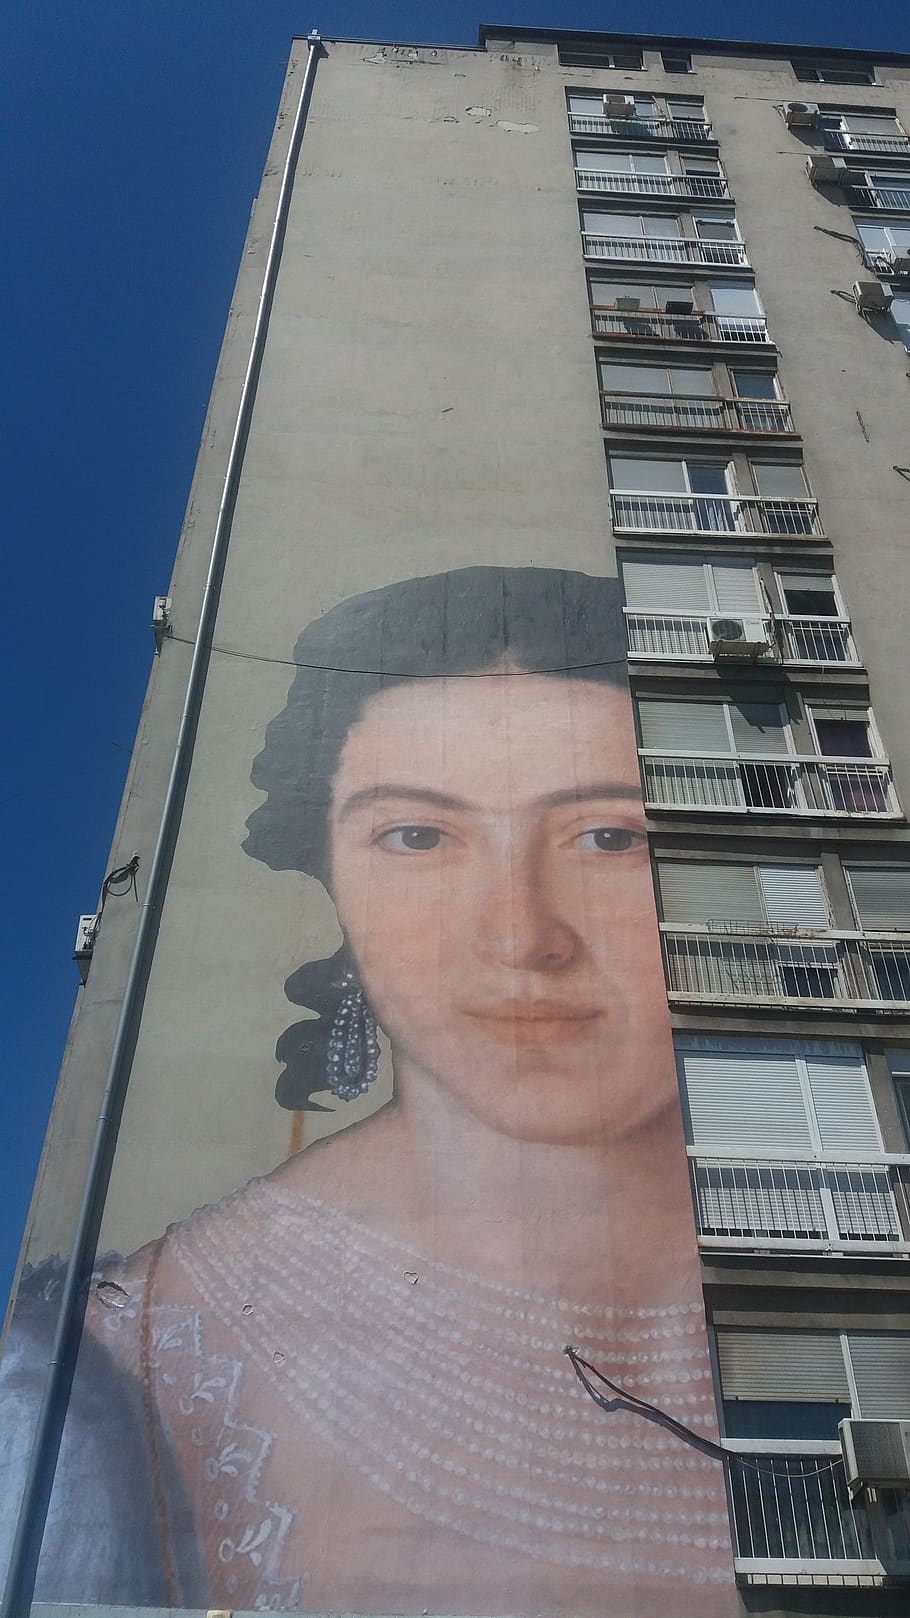 serbia, belgrade, graffiti, graffiti-wall, graffiti-art, portrait